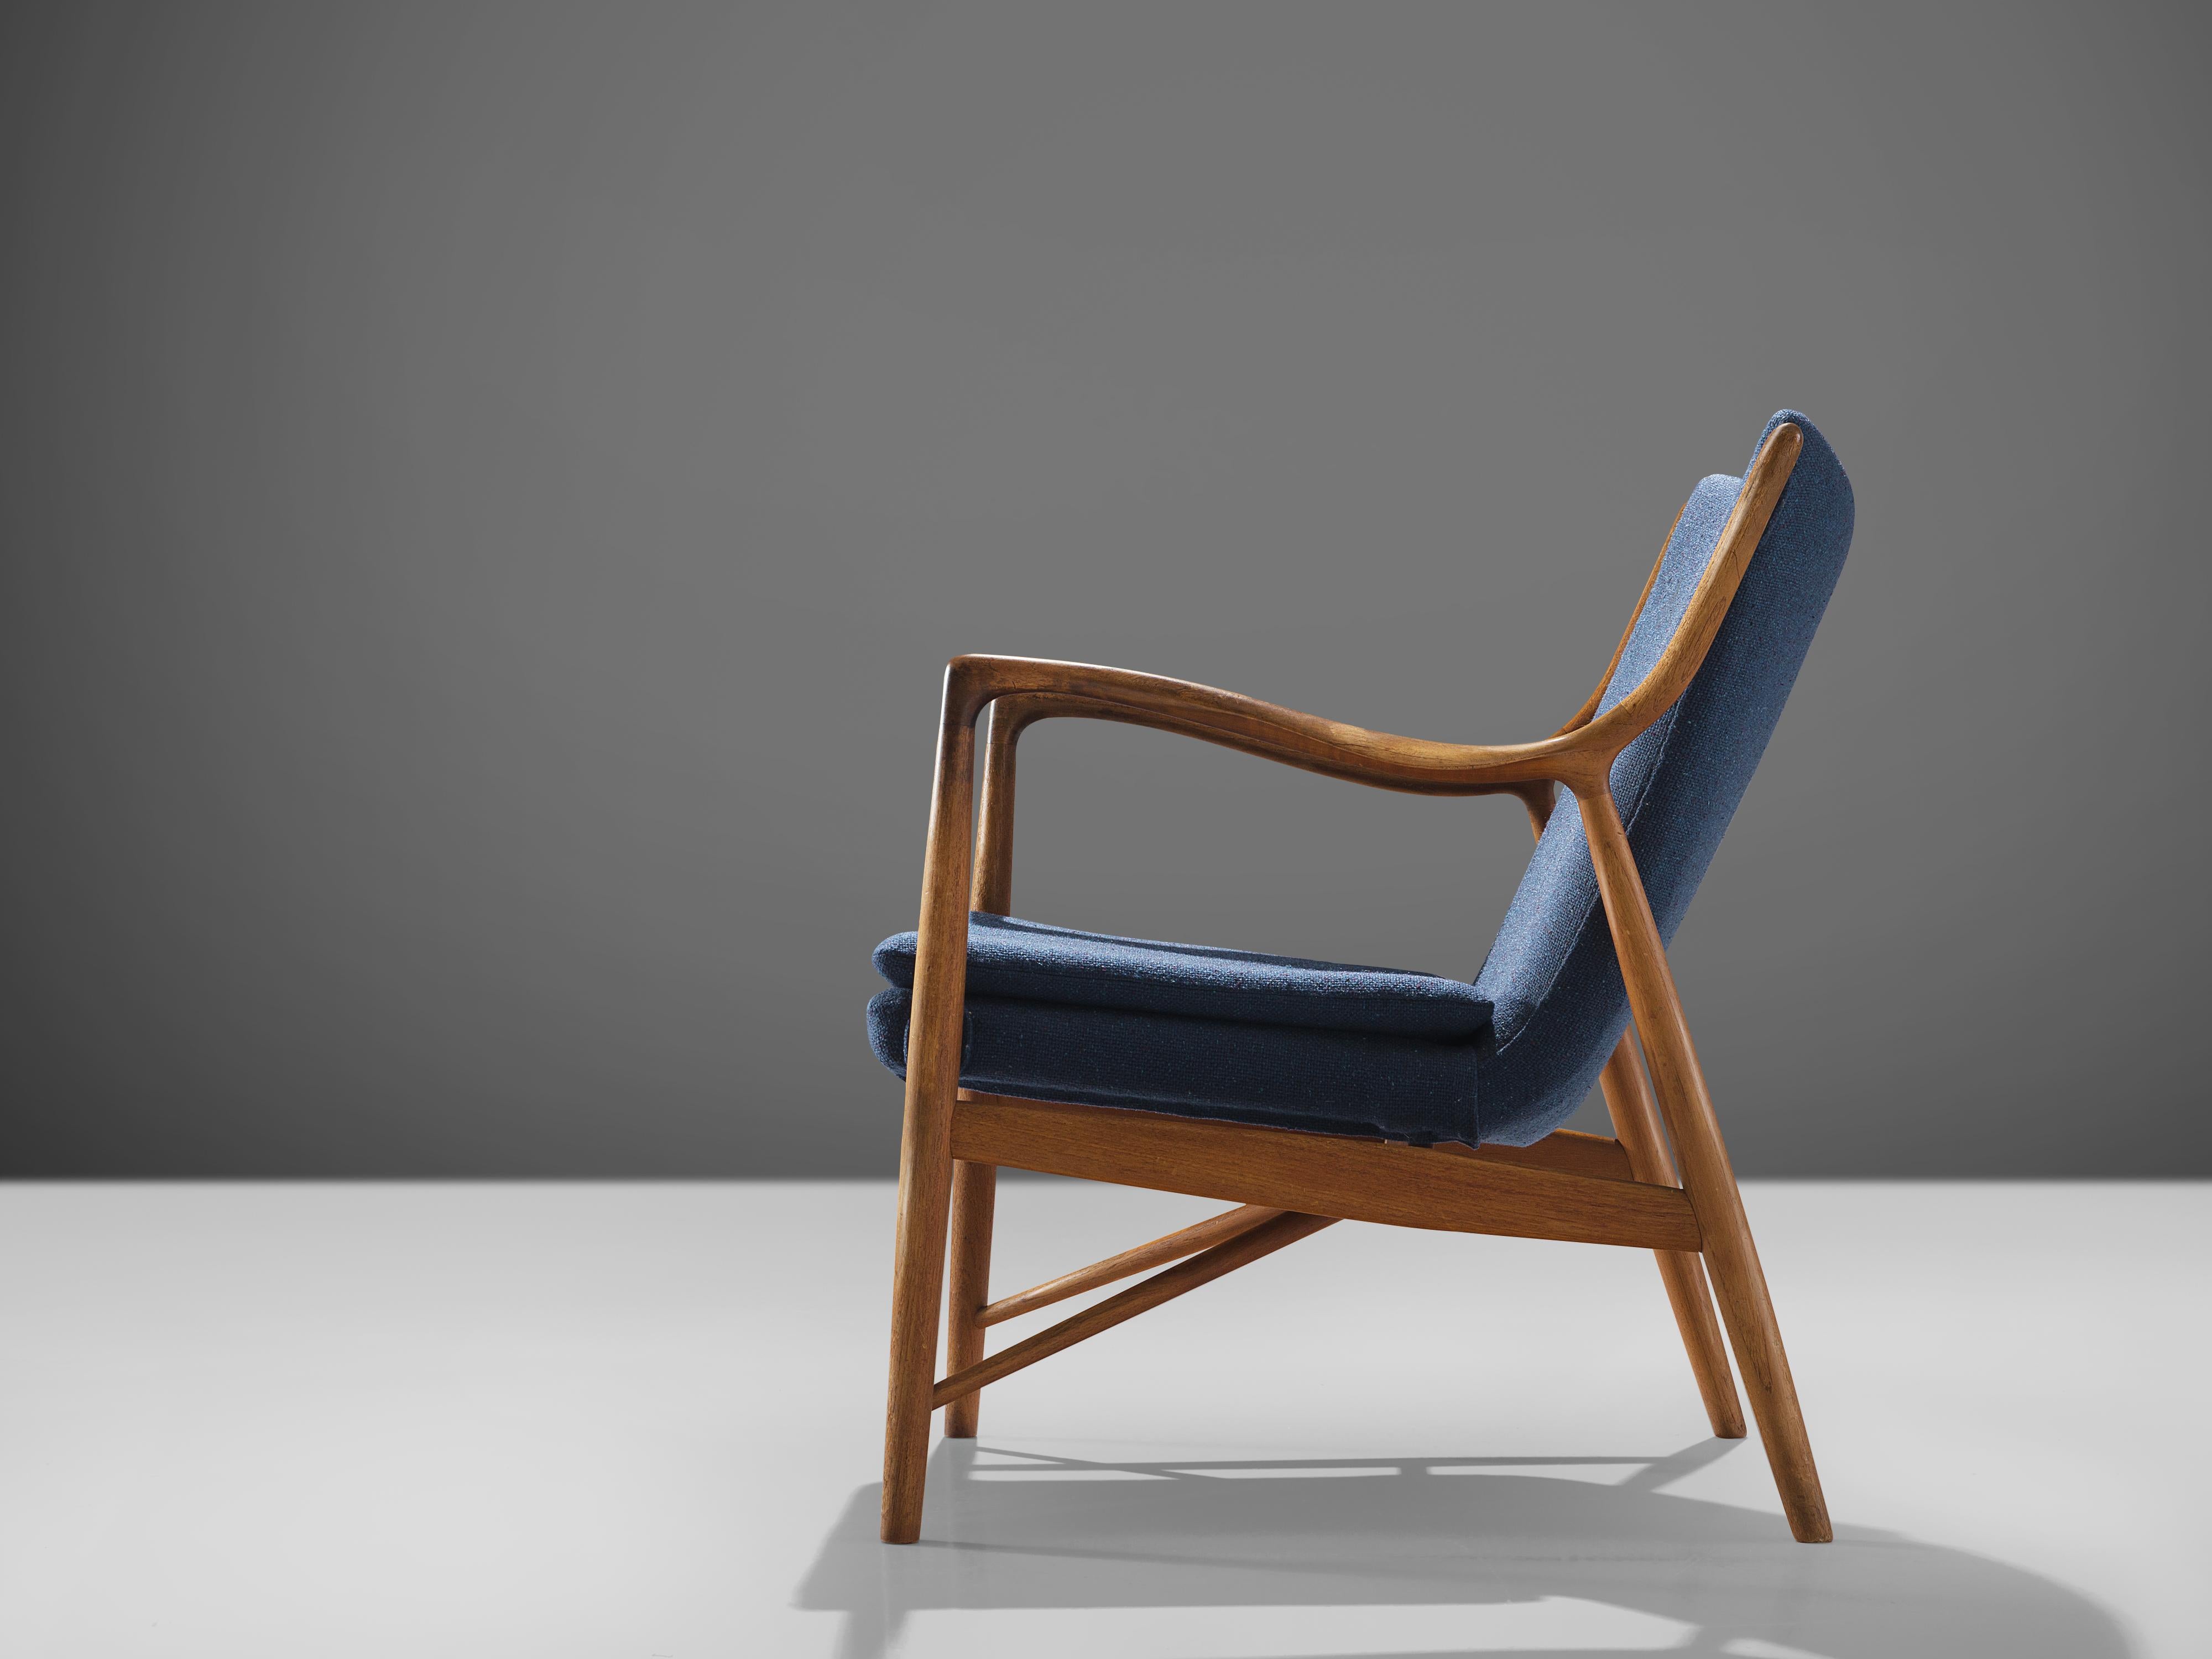 Mid-20th Century Finn Juhl for Niels Vodder Armchair 'NV 45' in Teak and Blue Fabric Upholstery